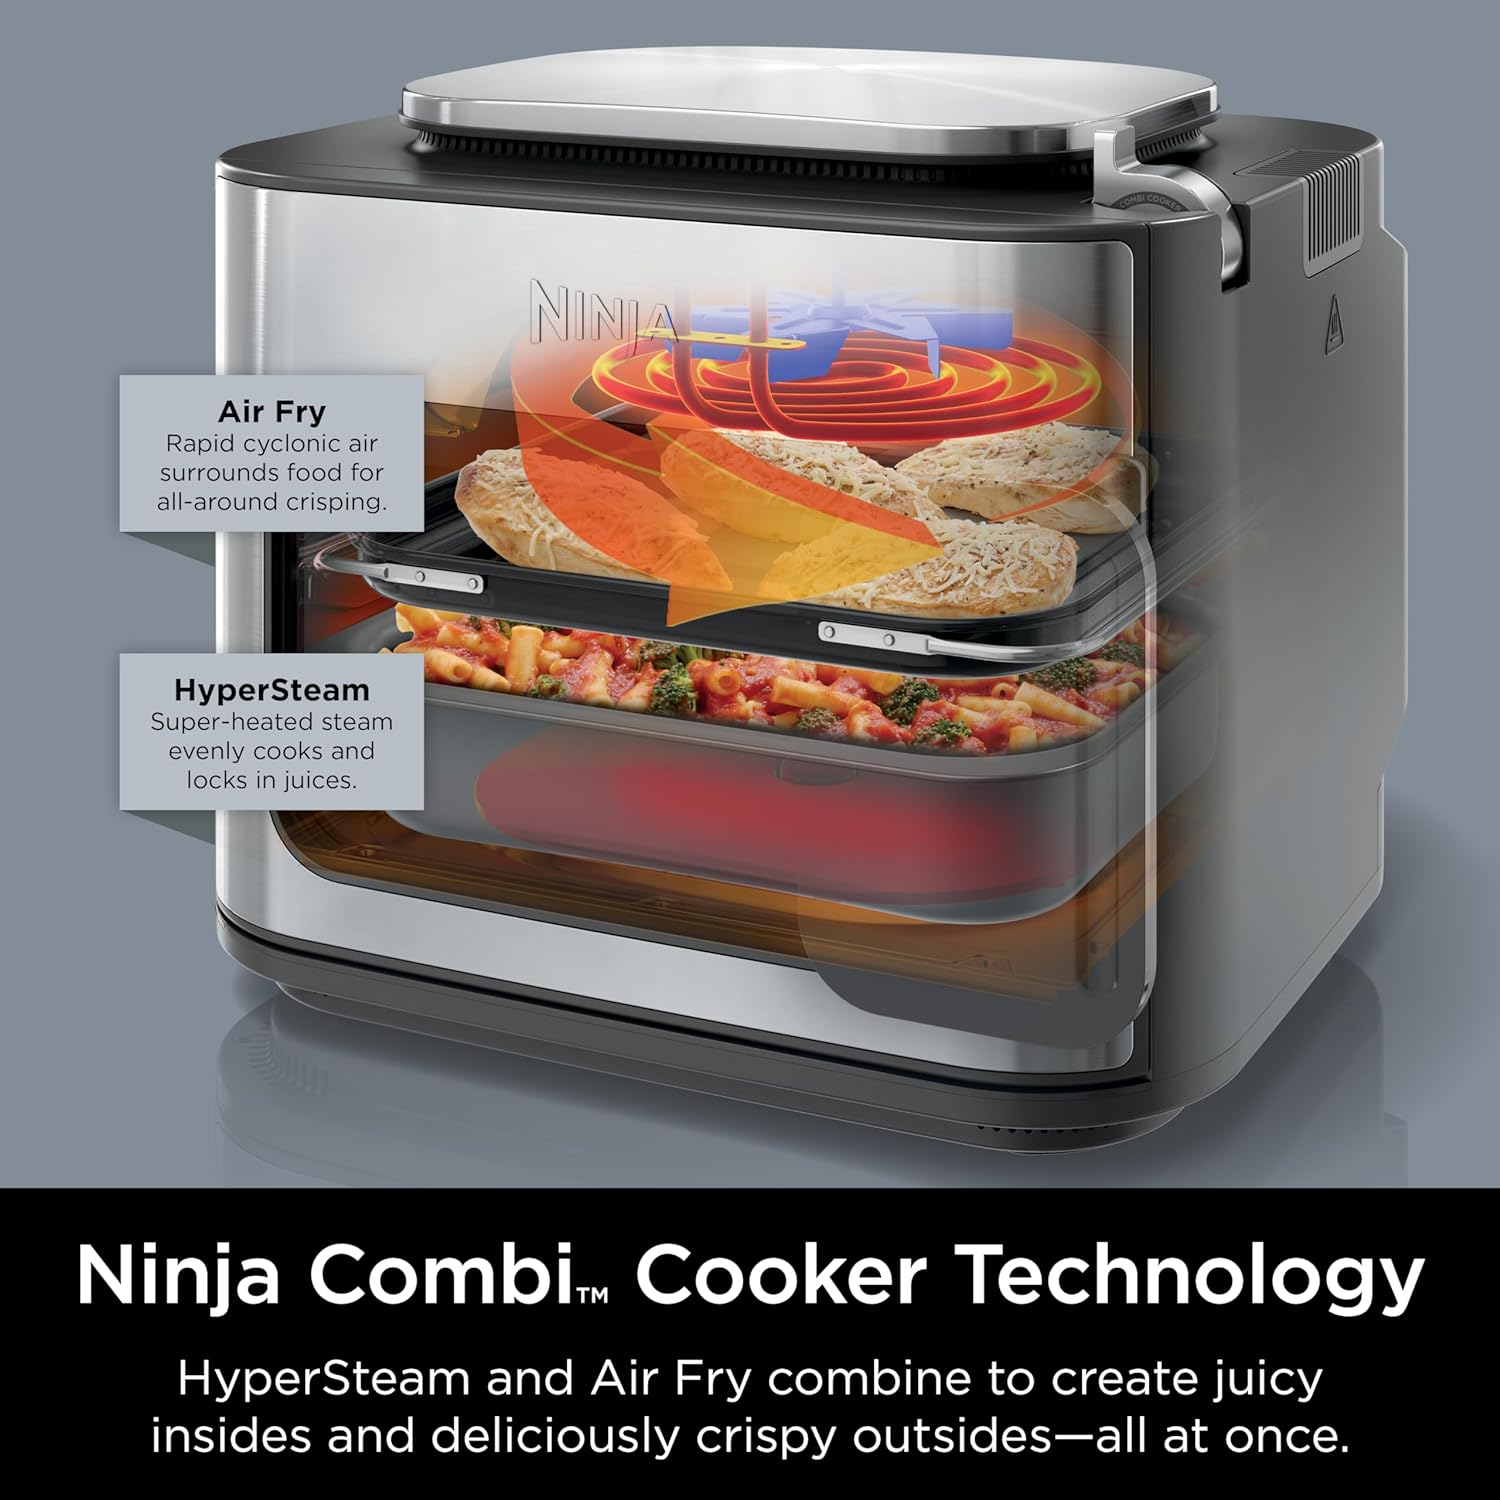 Ninja R-SFP701 14-in-1 Multicooker, Oven & Air Fryer, 15-Min Meals, 3 Accessories, Grey - Certified Refurbished